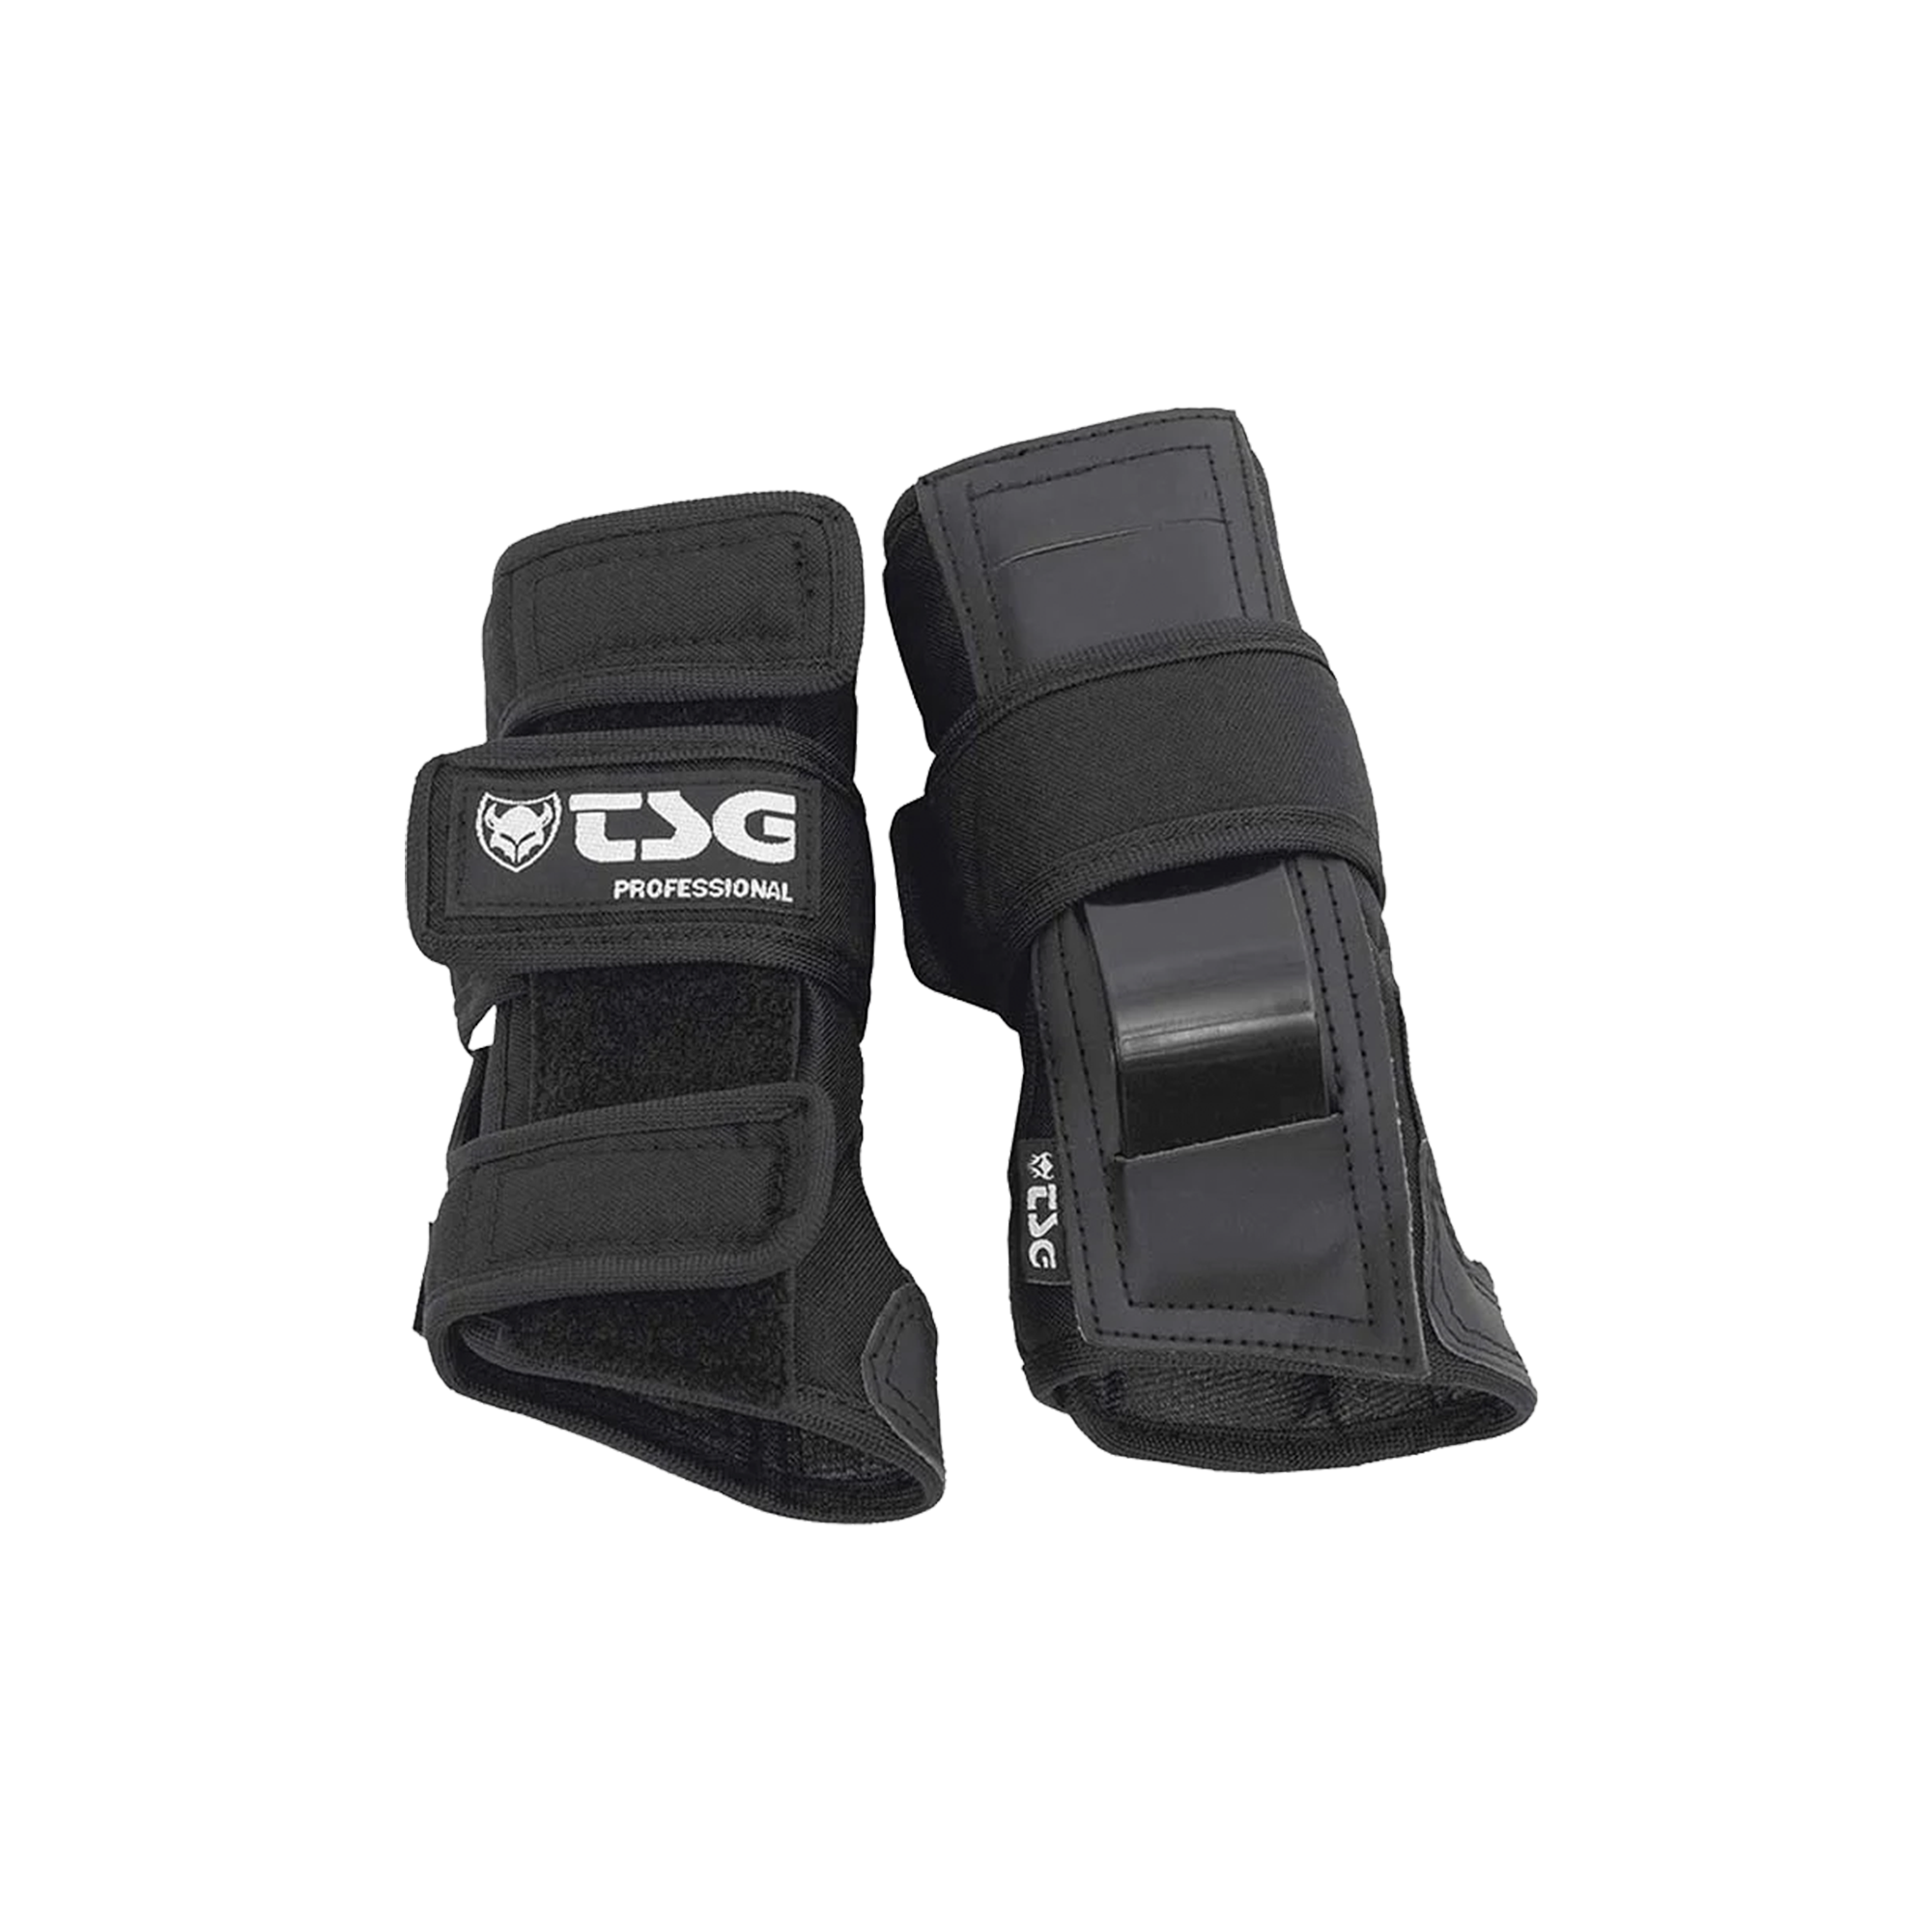 Fingerless Pro E-Skate Glove from flatland3d and Knox - electric  skateboarding glove